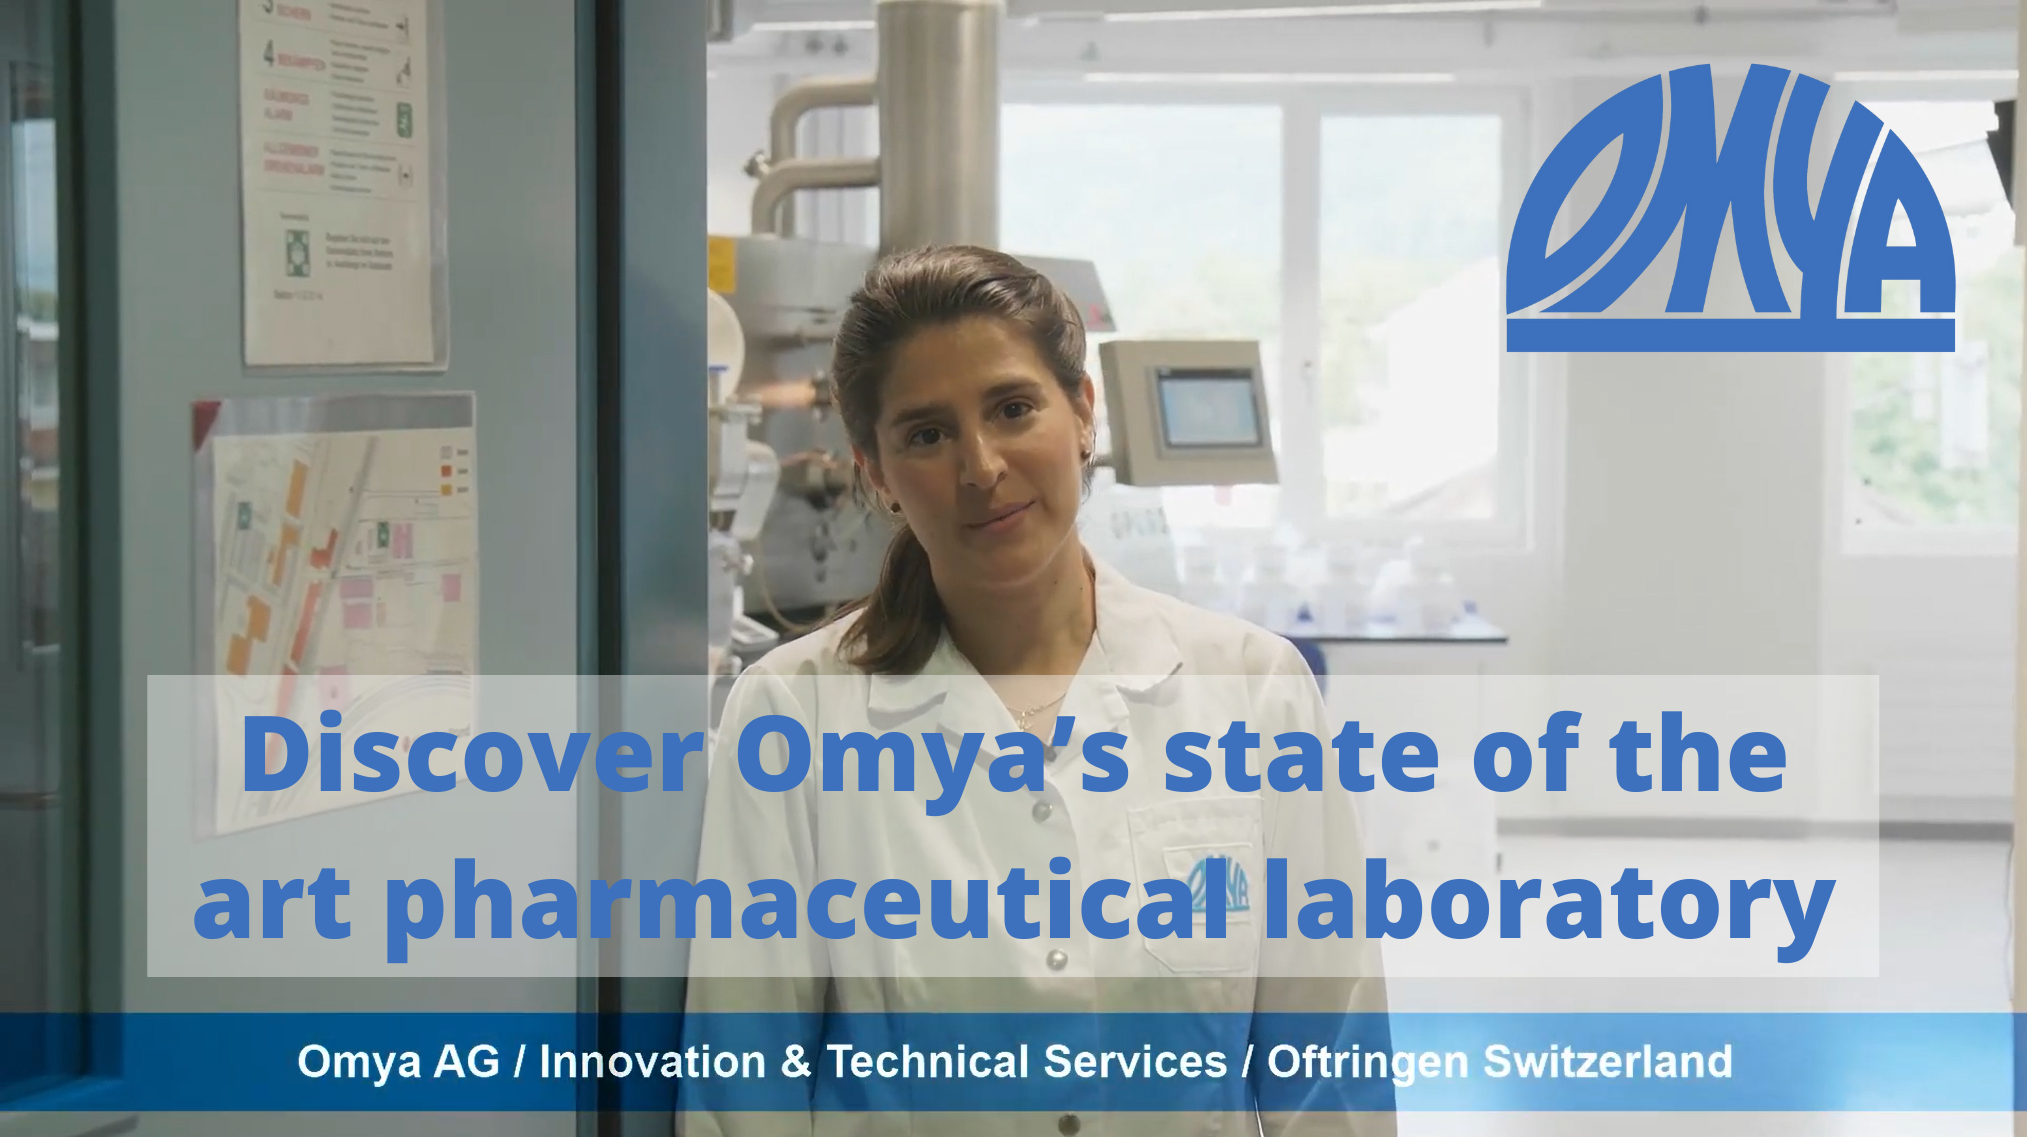 Omya’s state of the art pharmaceutical laboratory